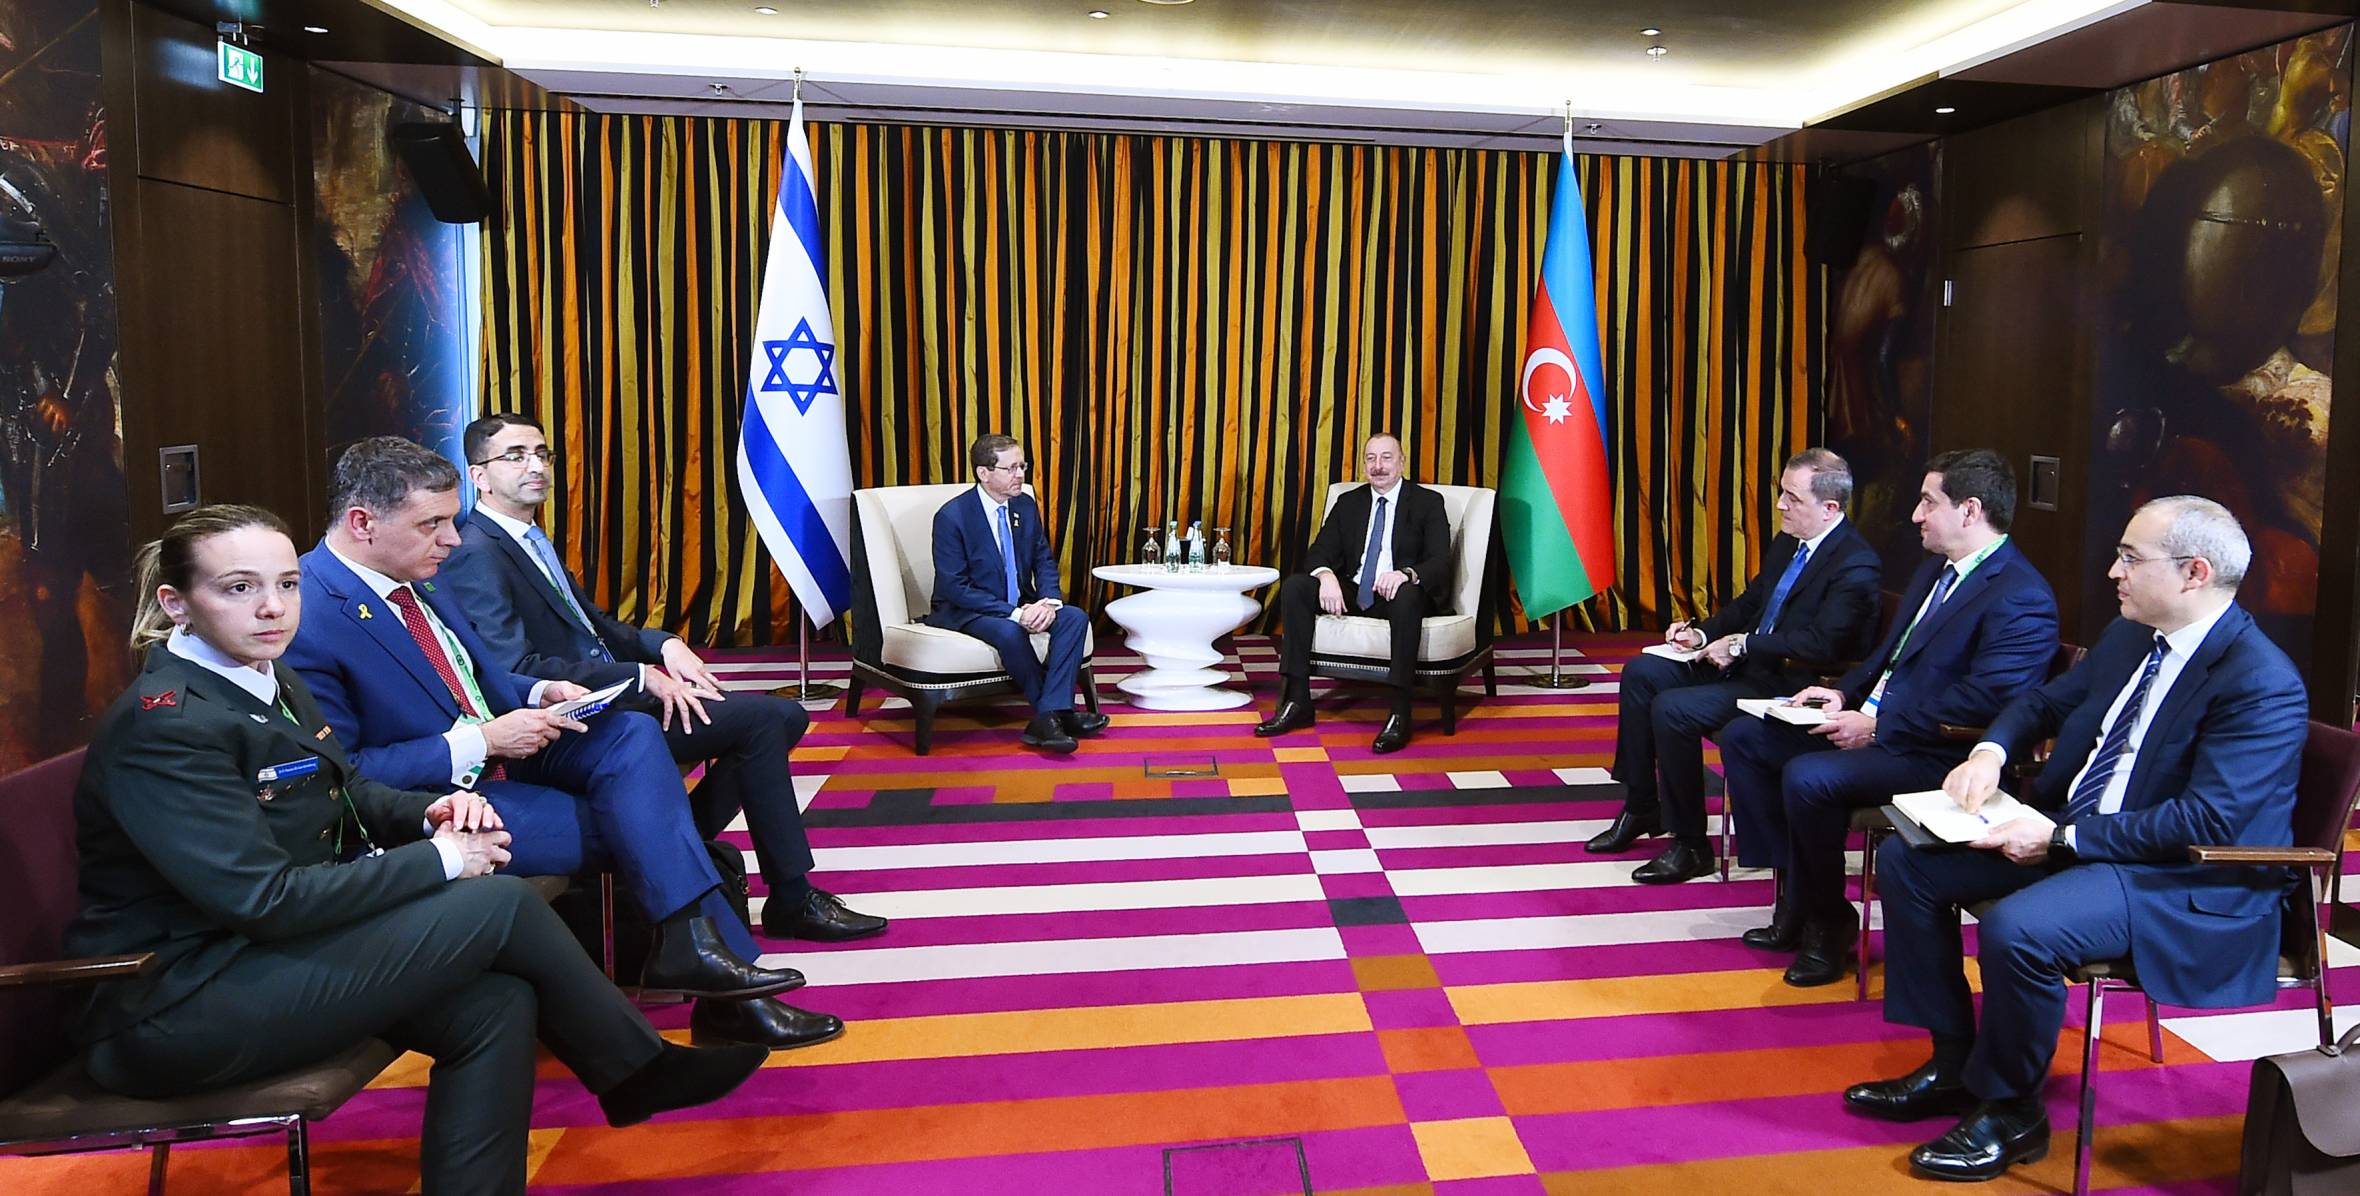 Ilham Aliyev met with President of Israel Isaac Herzog in Munich